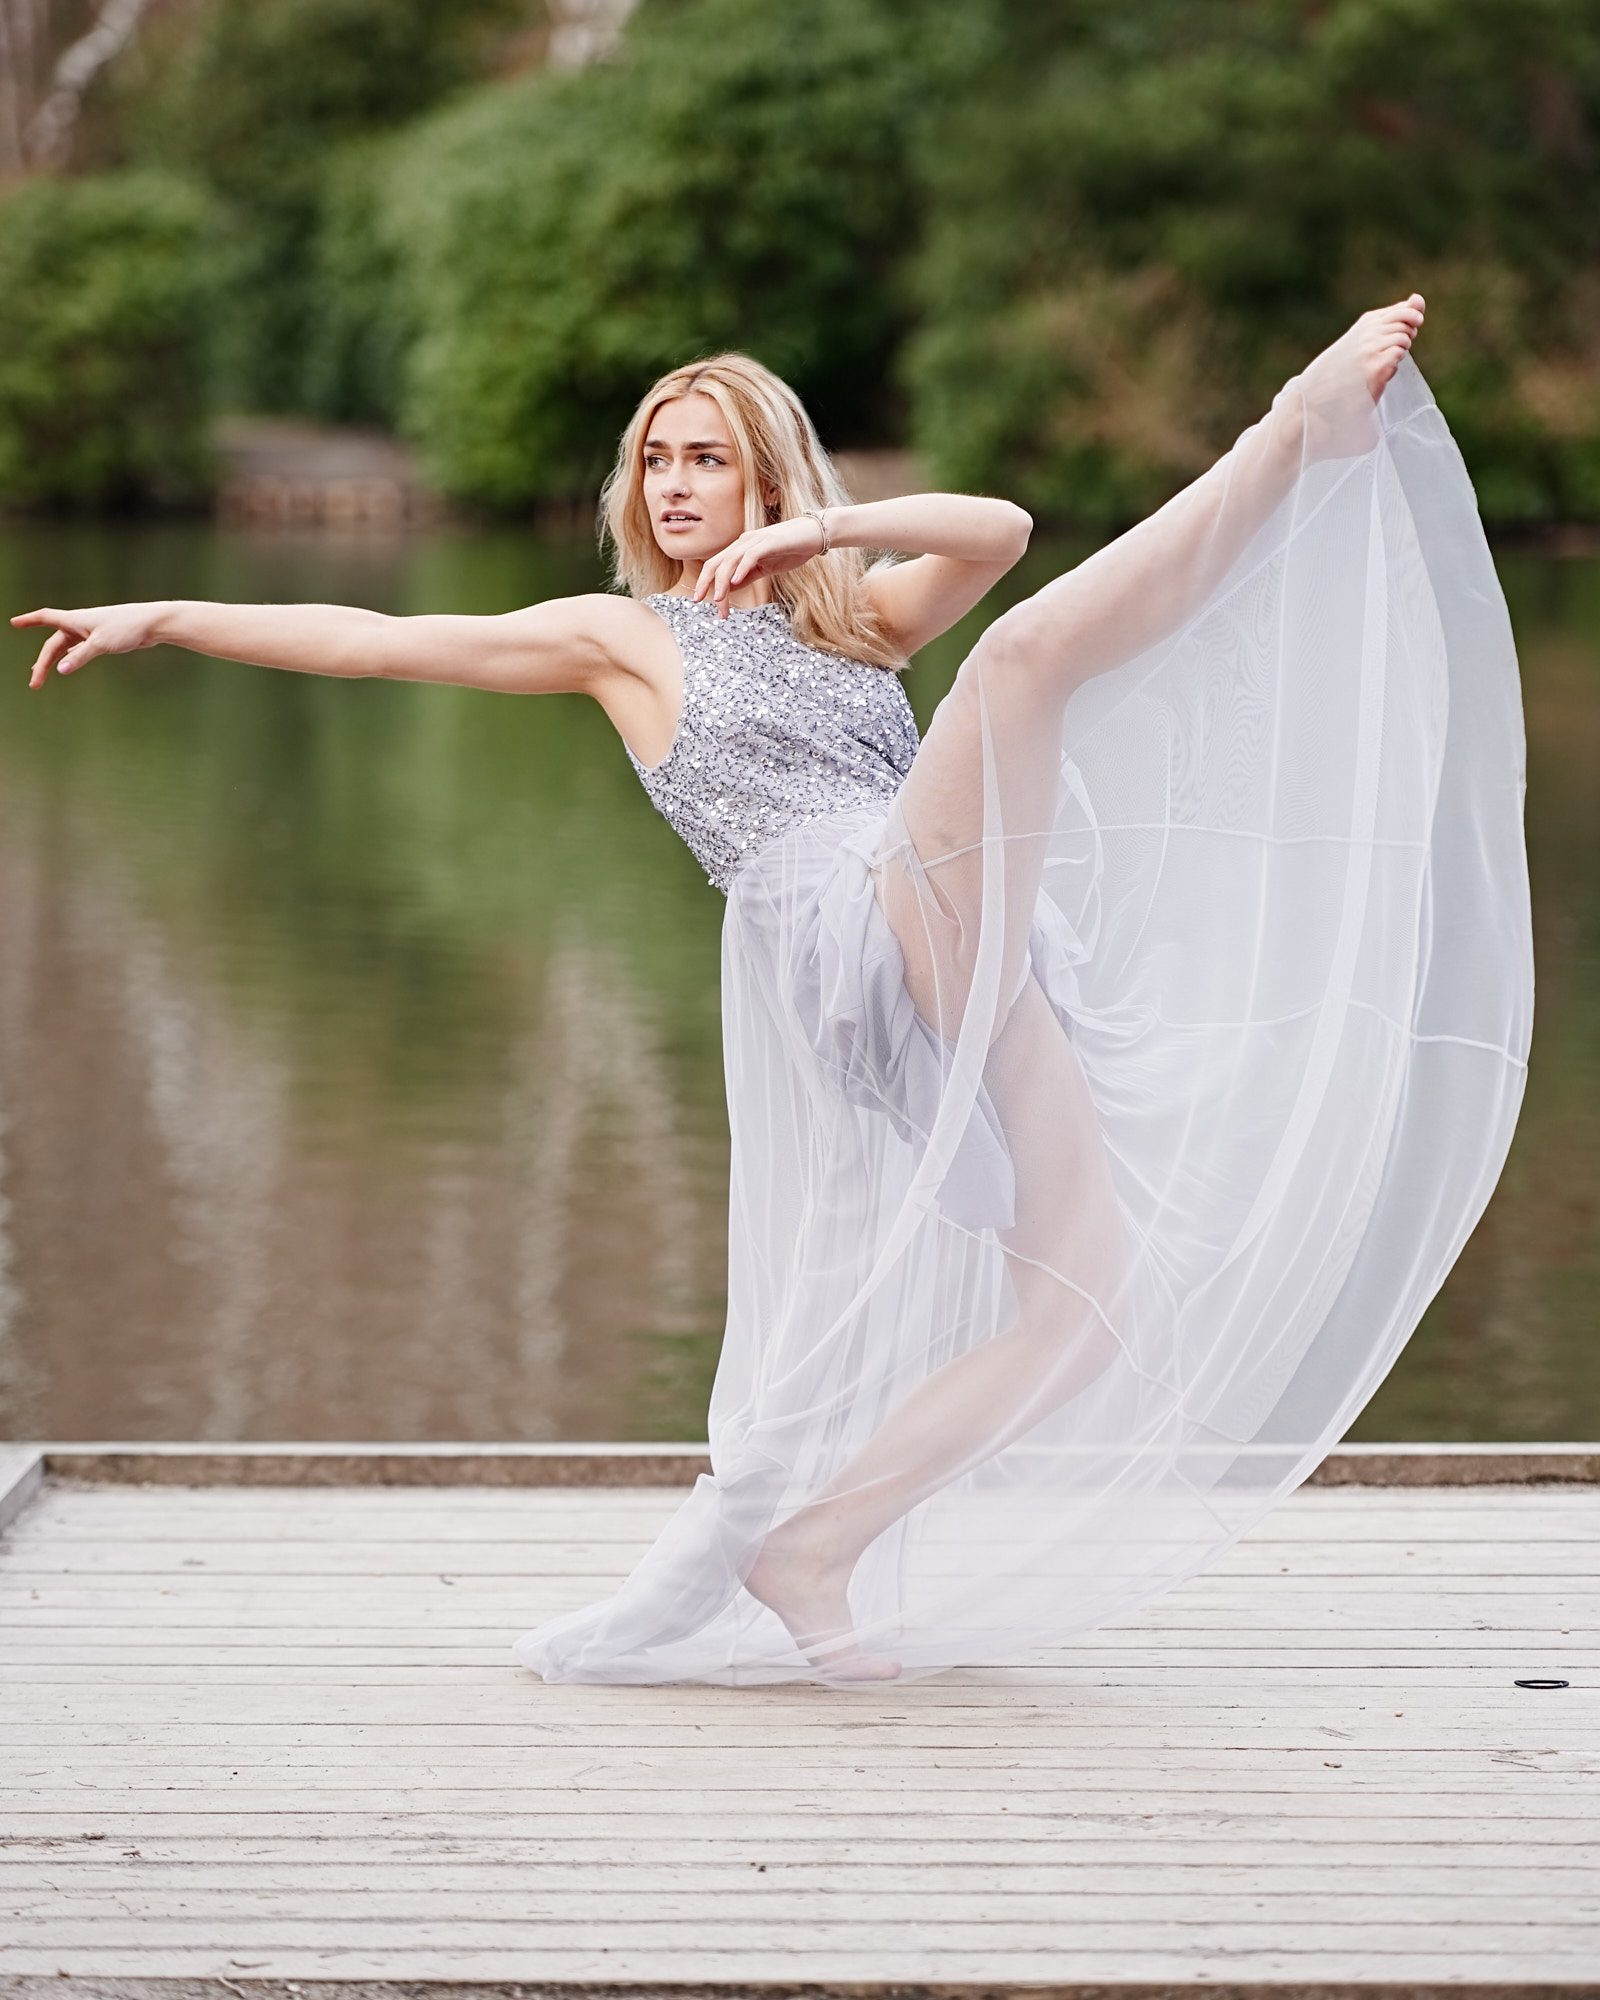 Surrey Dancer posing by a lake